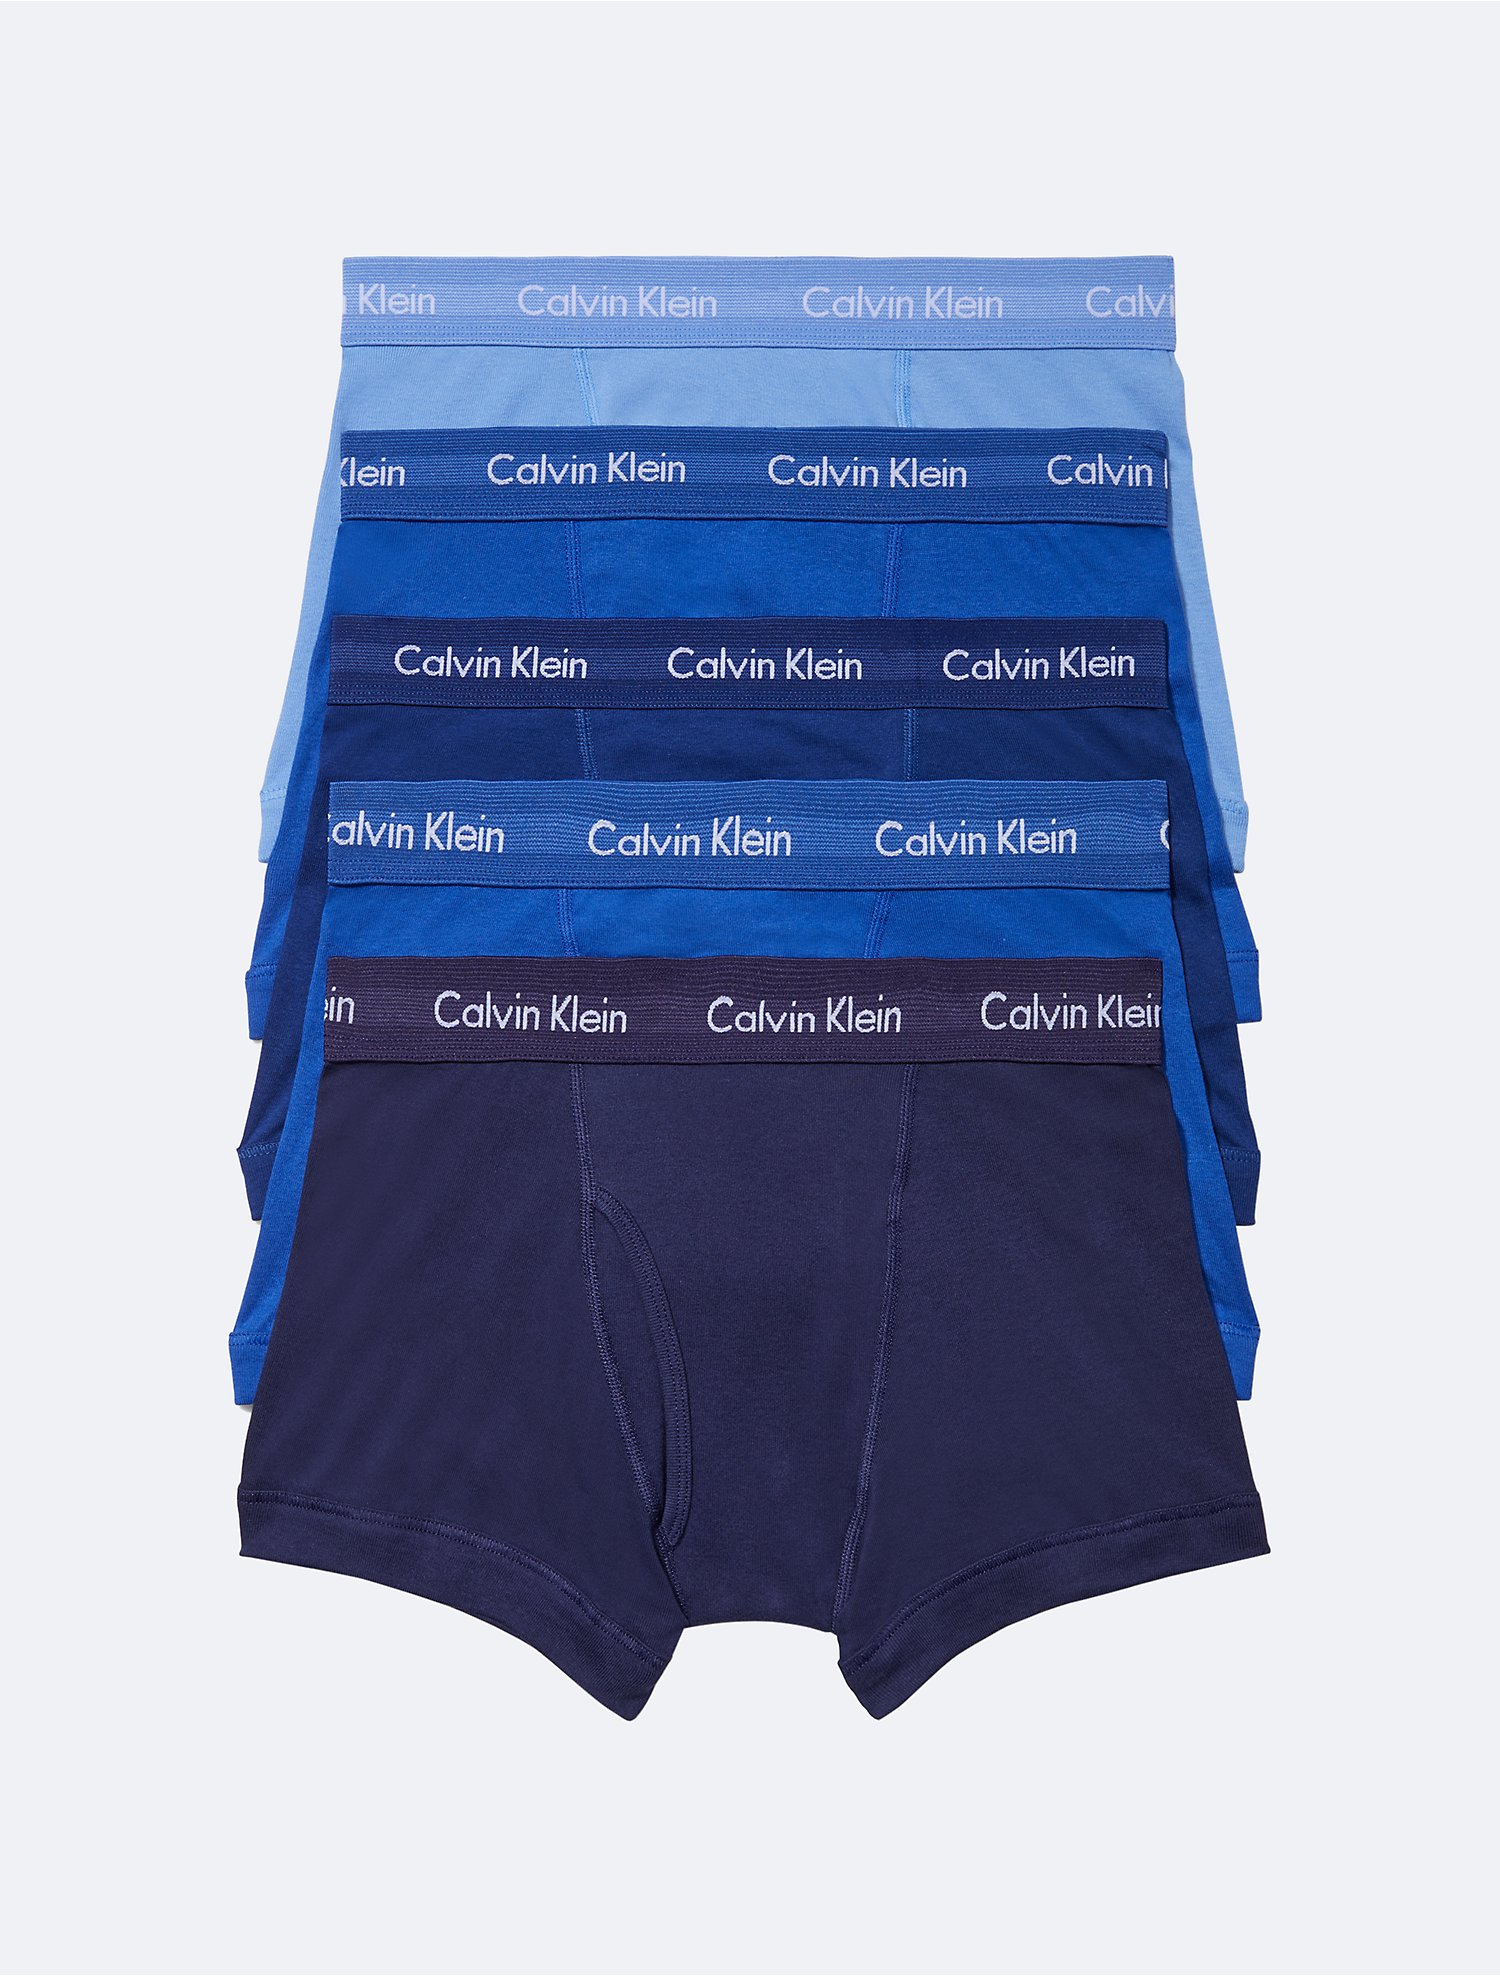 Cotton Classics 5-Pack Trunk | Calvin Klein